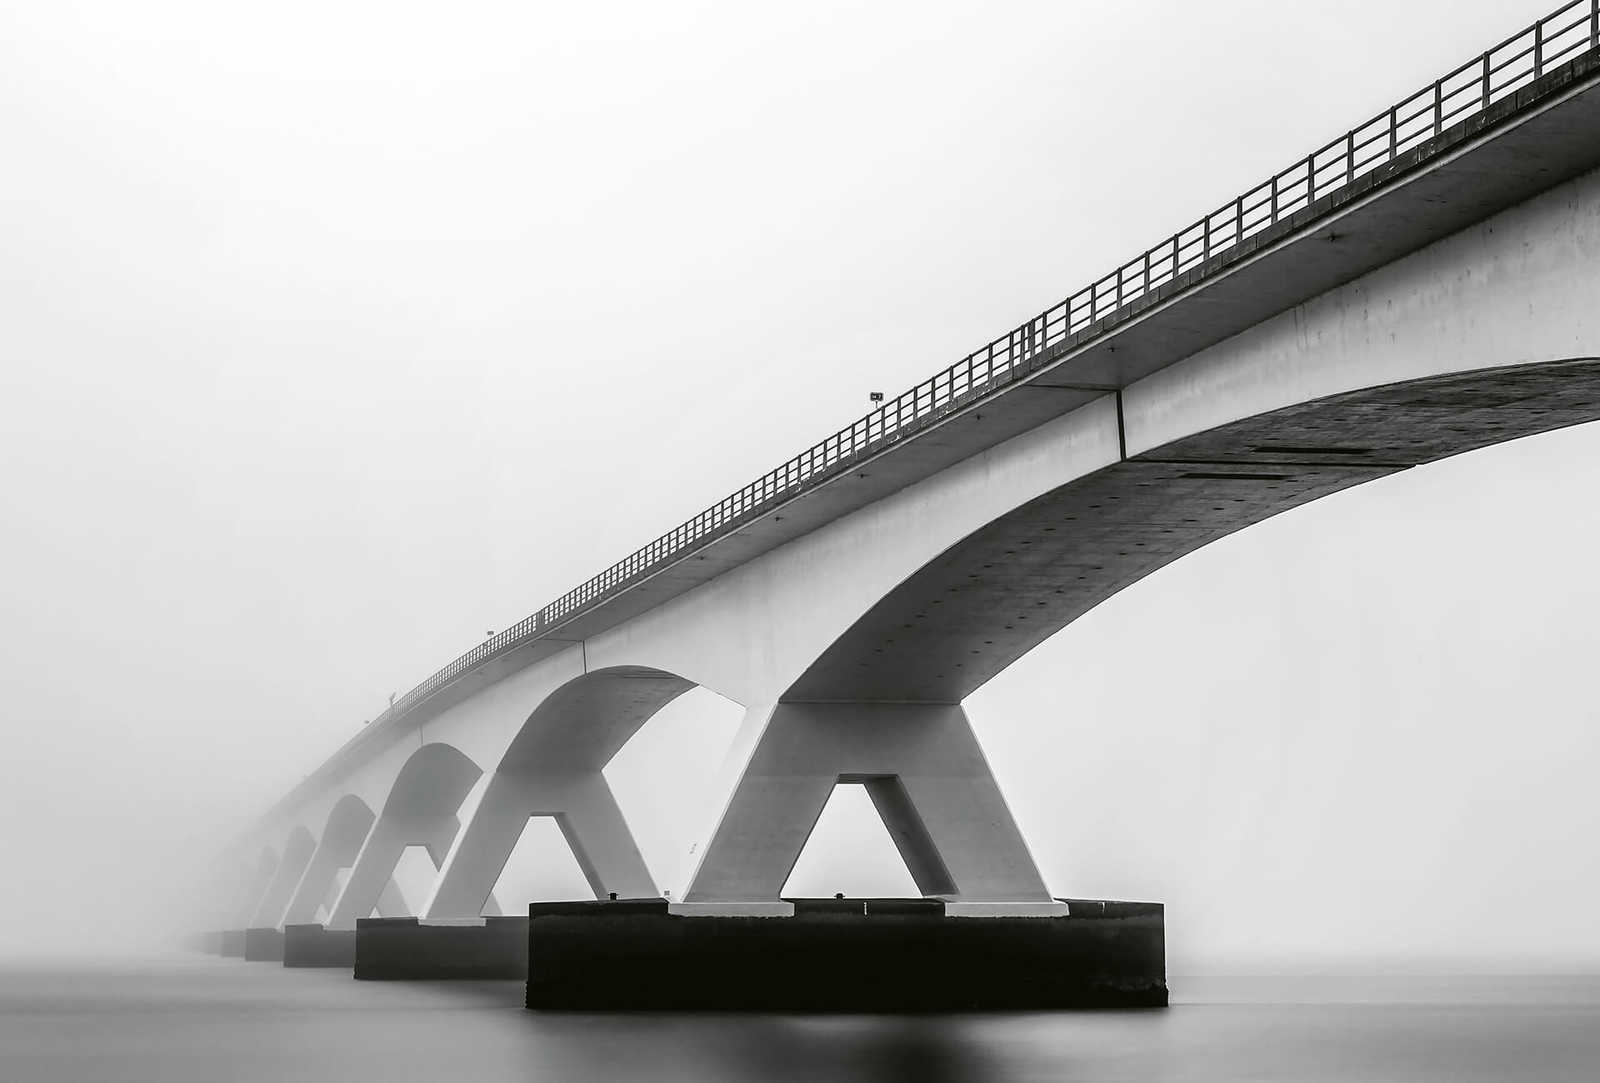         Photo wallpaper bridge in the fog - grey, white, black
    